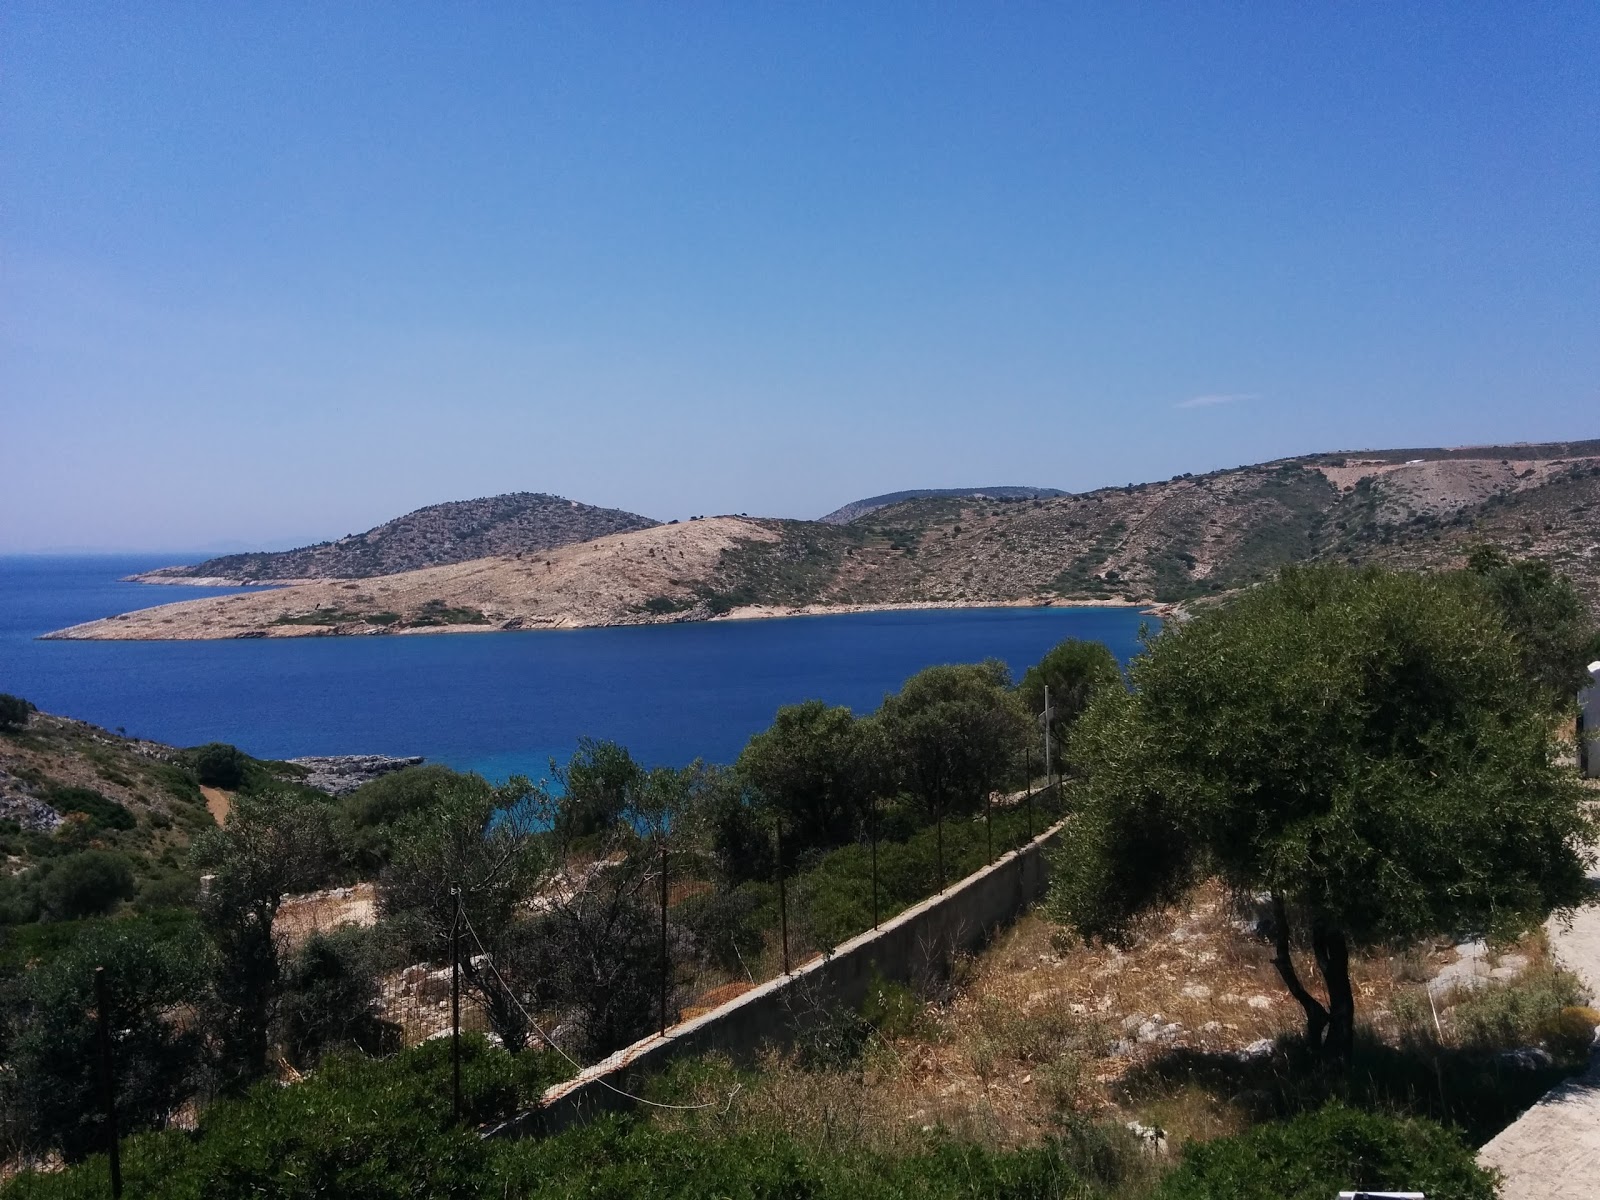 Fotografija Agios Nikolaos beach nahaja se v naravnem okolju